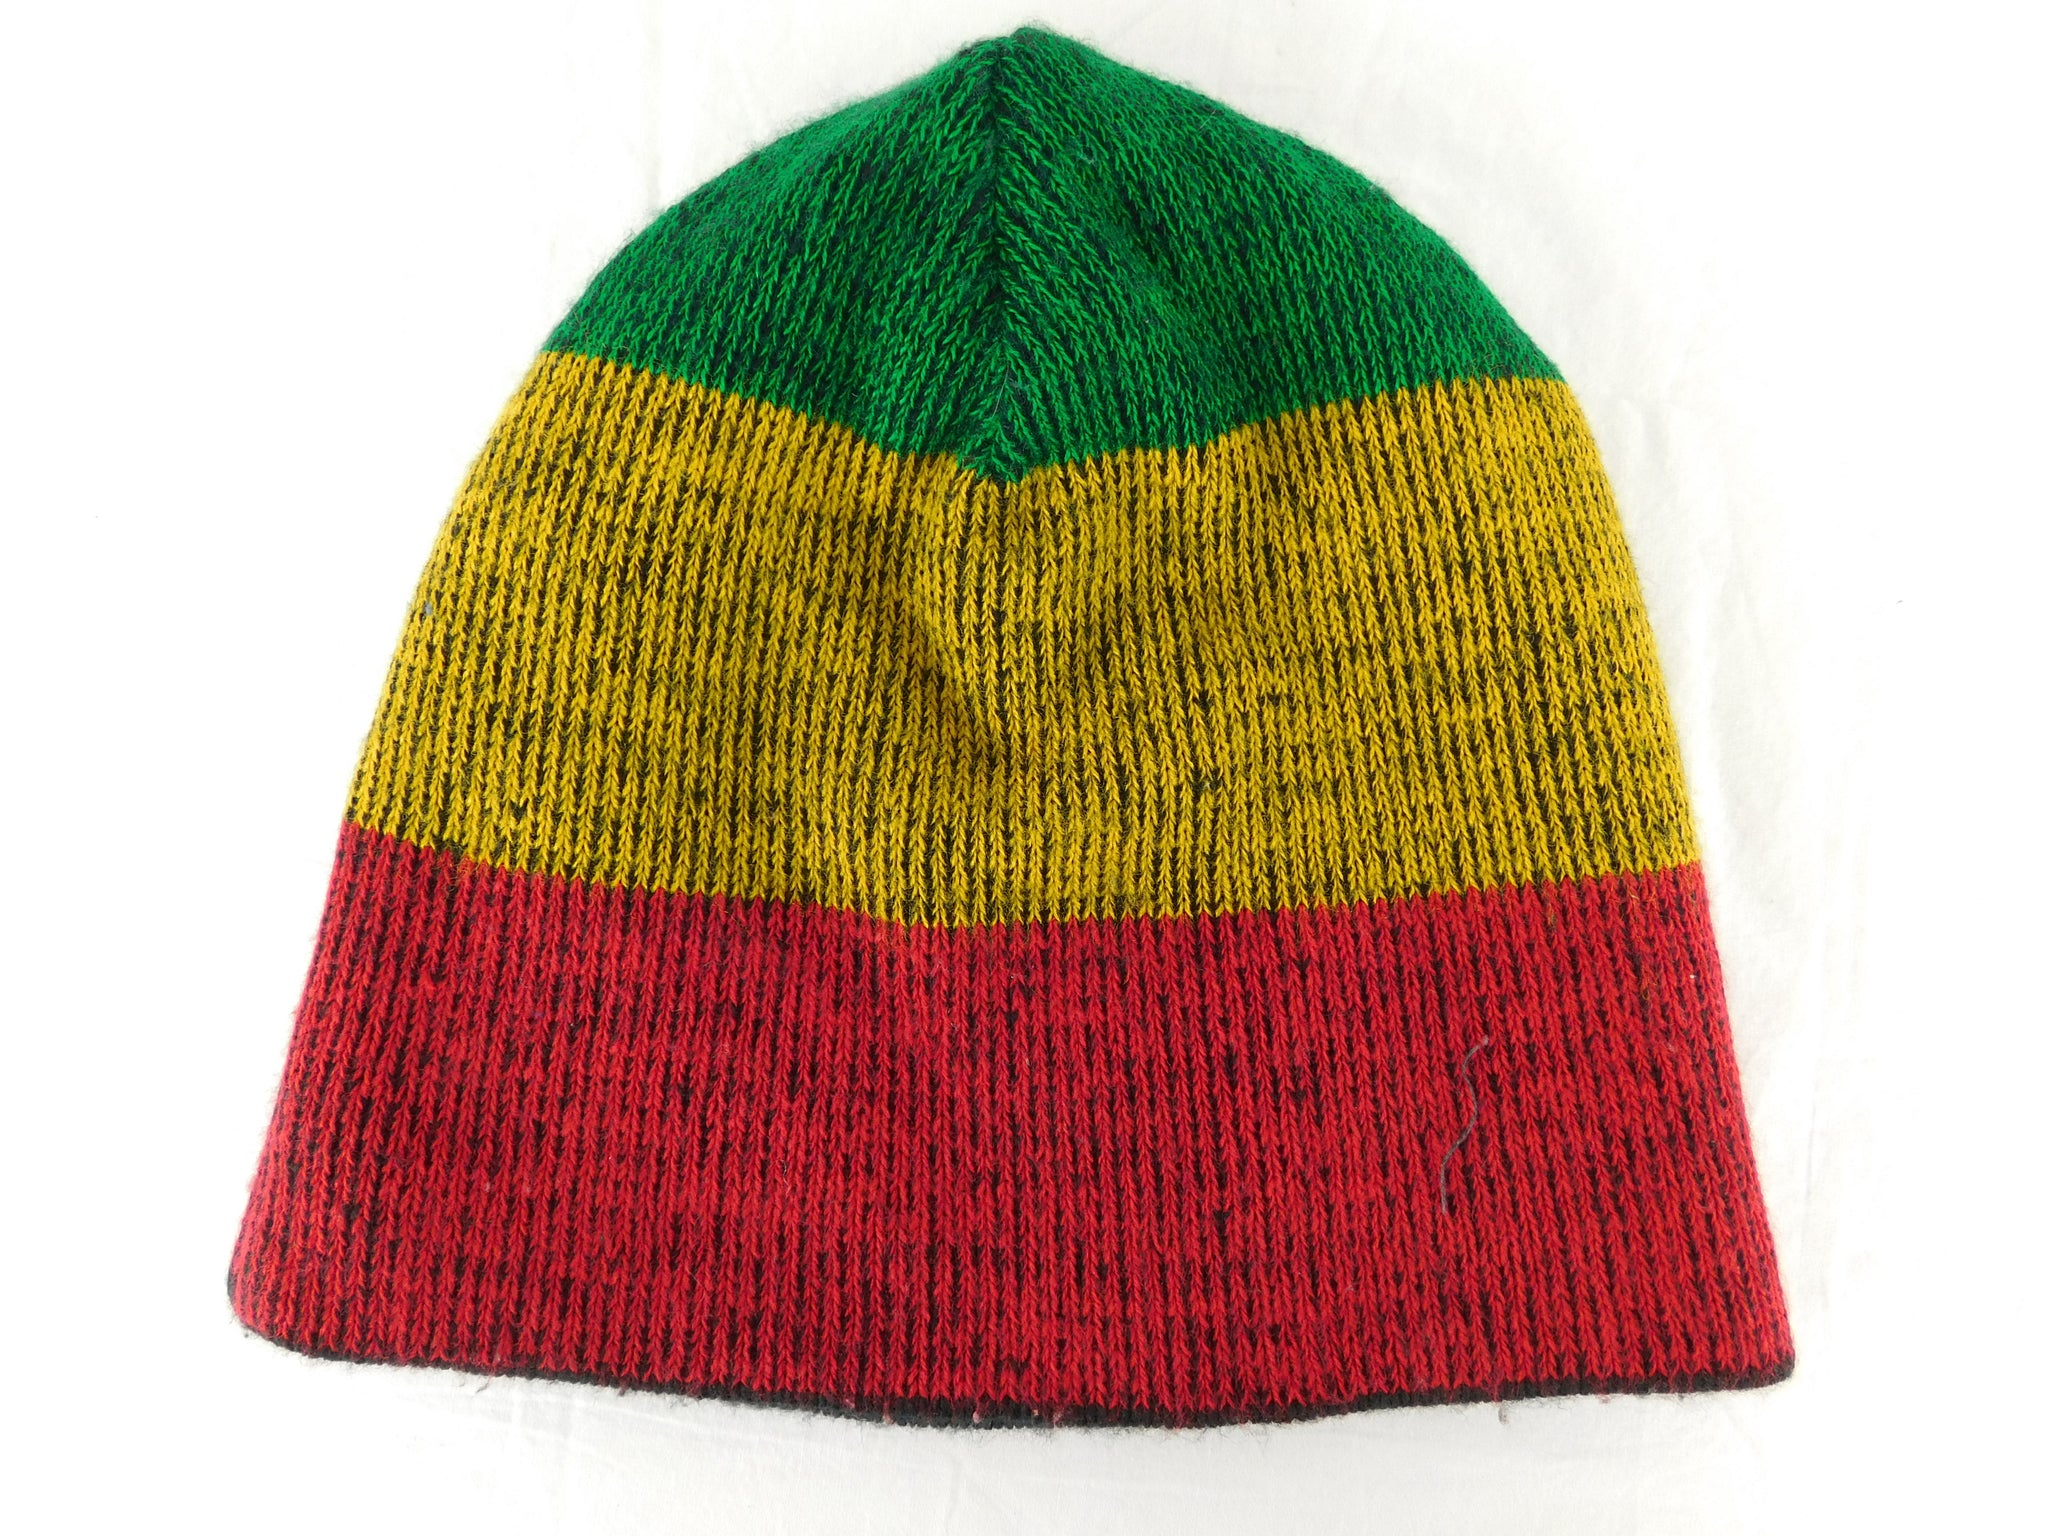 Knit cap in Rasta colors